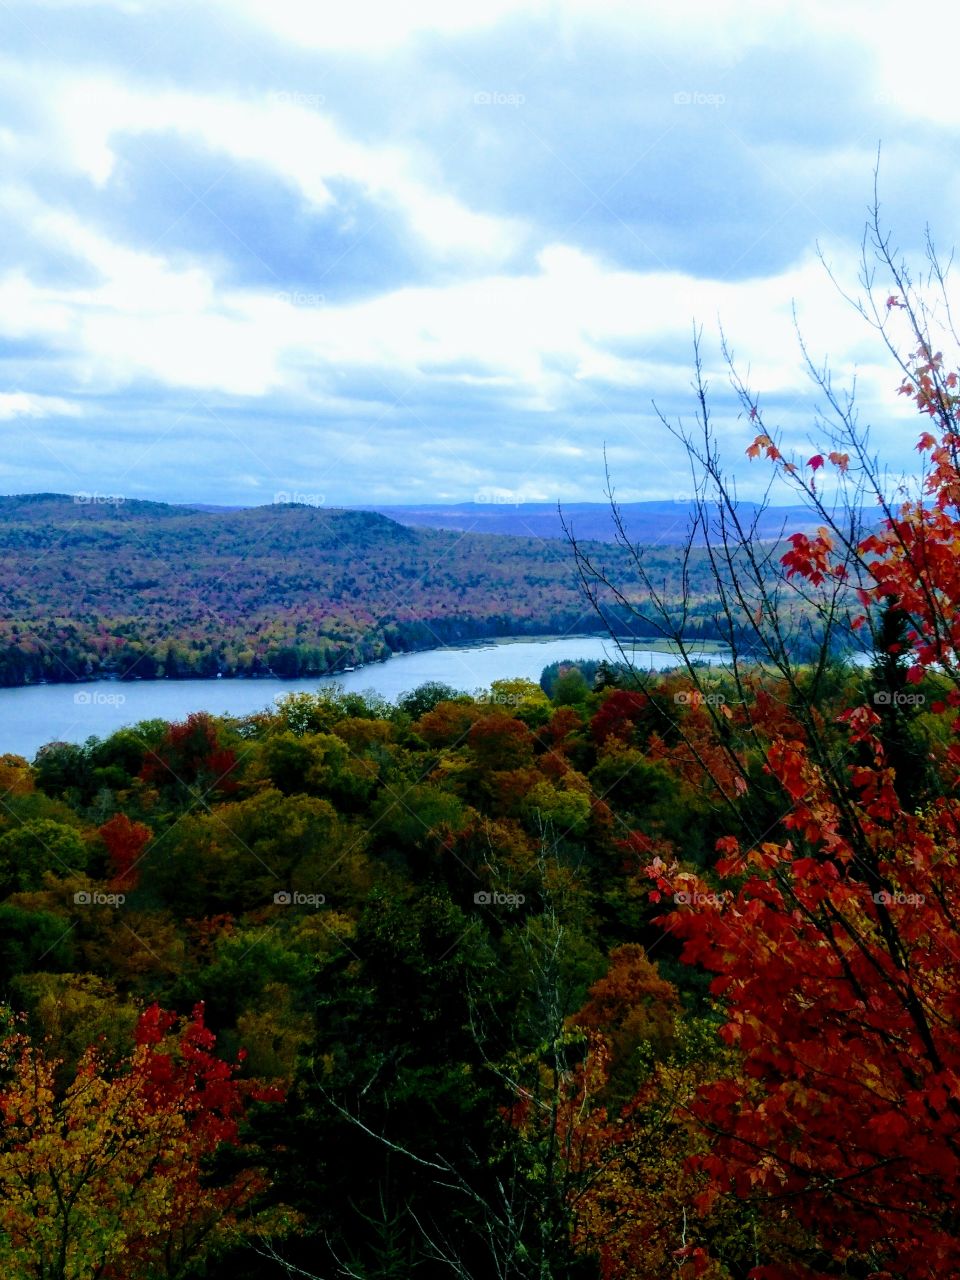 Autumnal beauty in the Adirondacks